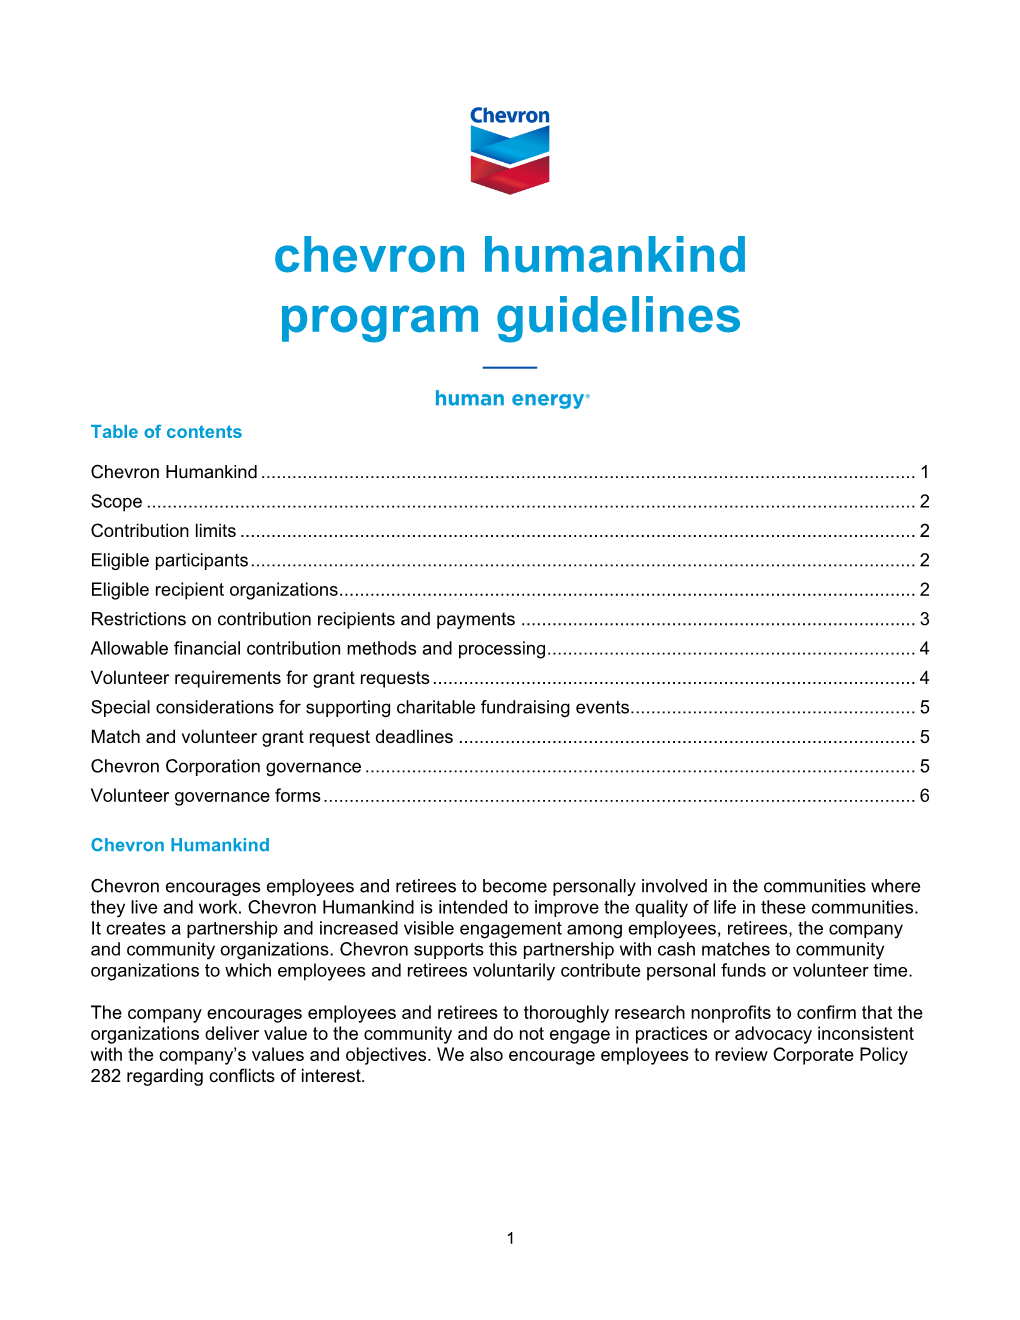 Chevron Humankind Program Guidelines